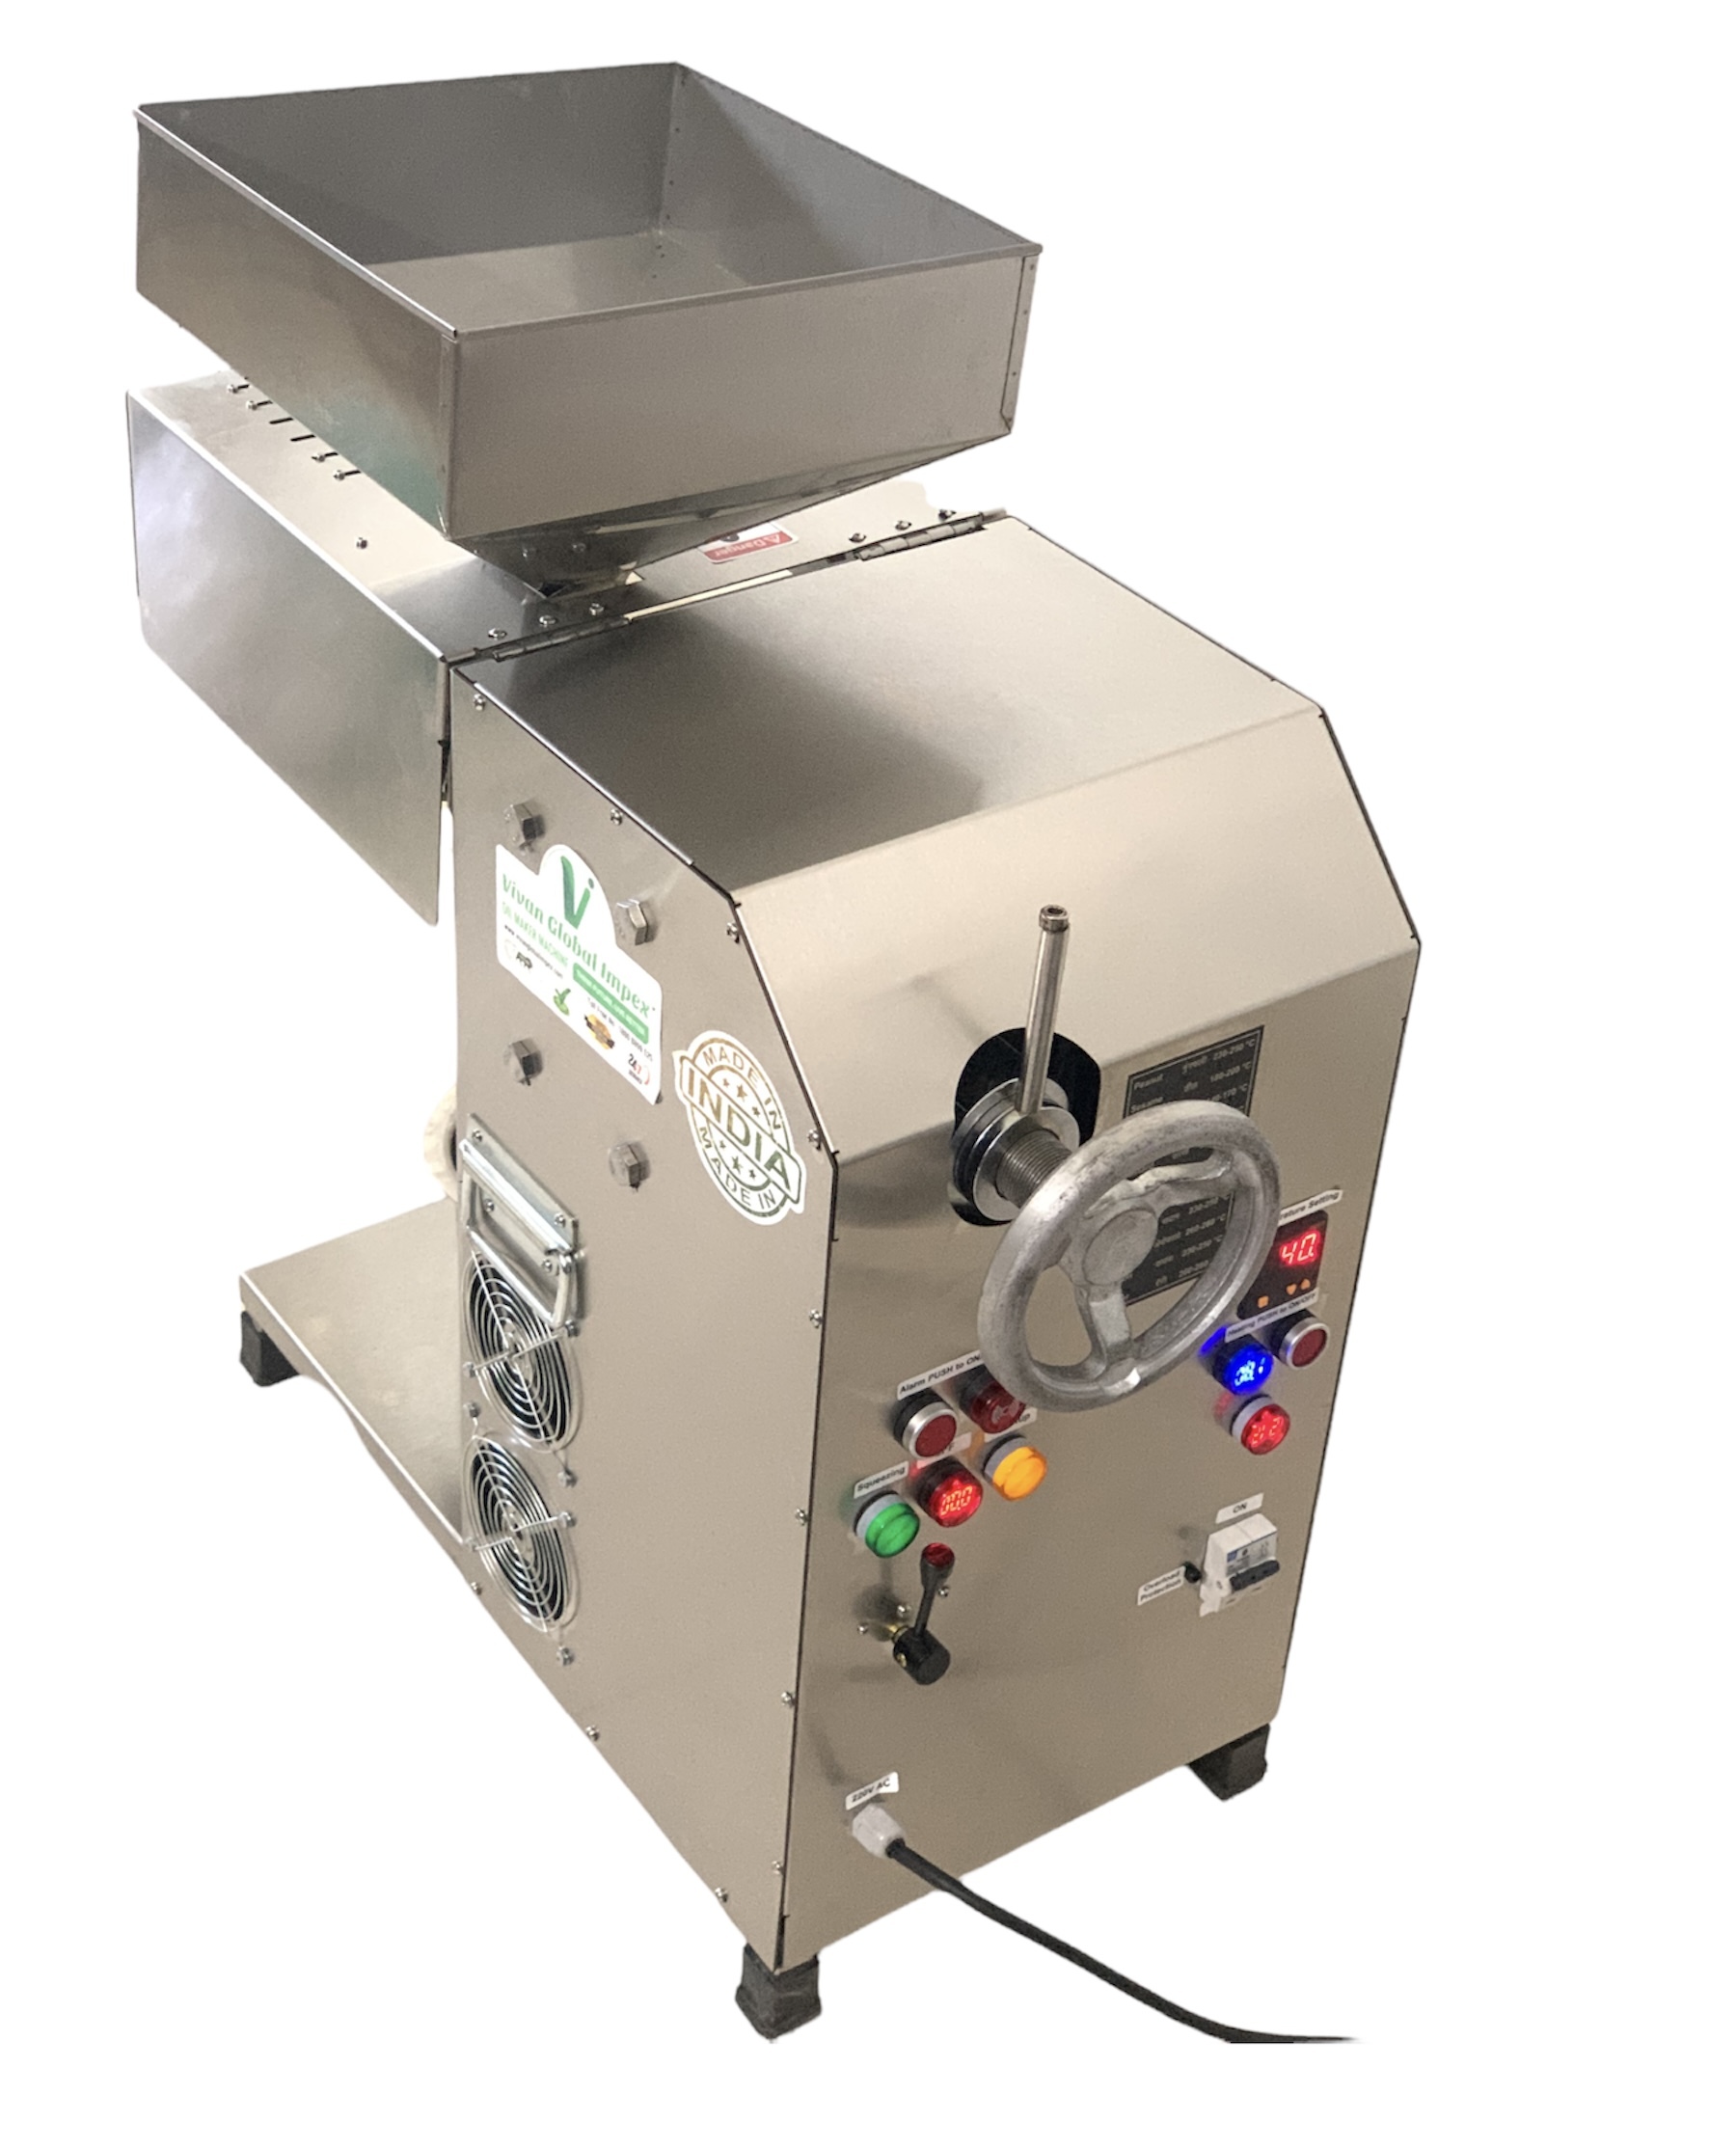 Cold Press Oil Machine For Commercial Use 4500 Watt